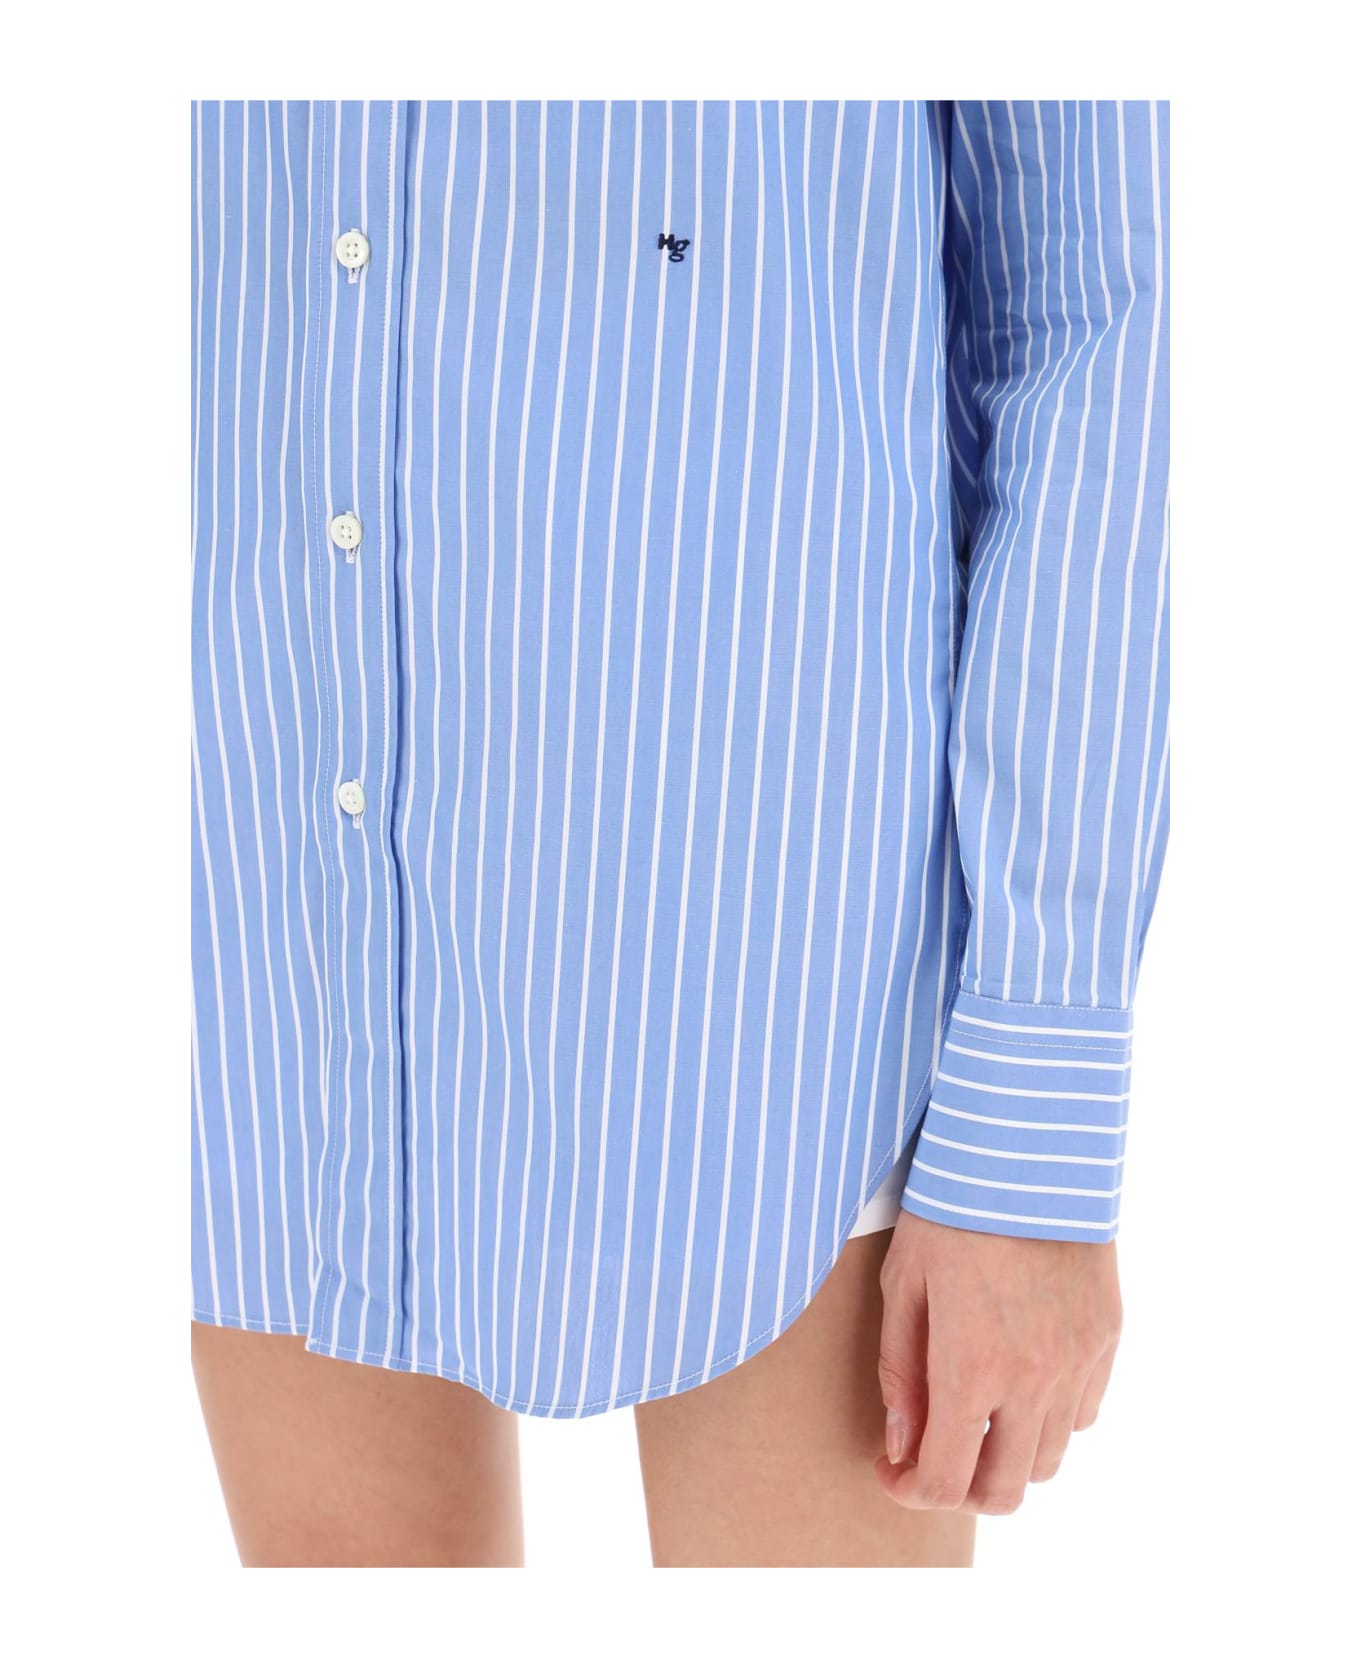 HommeGirls Striped Poplin Shirt - BLUE WHITE (Blue) シャツ